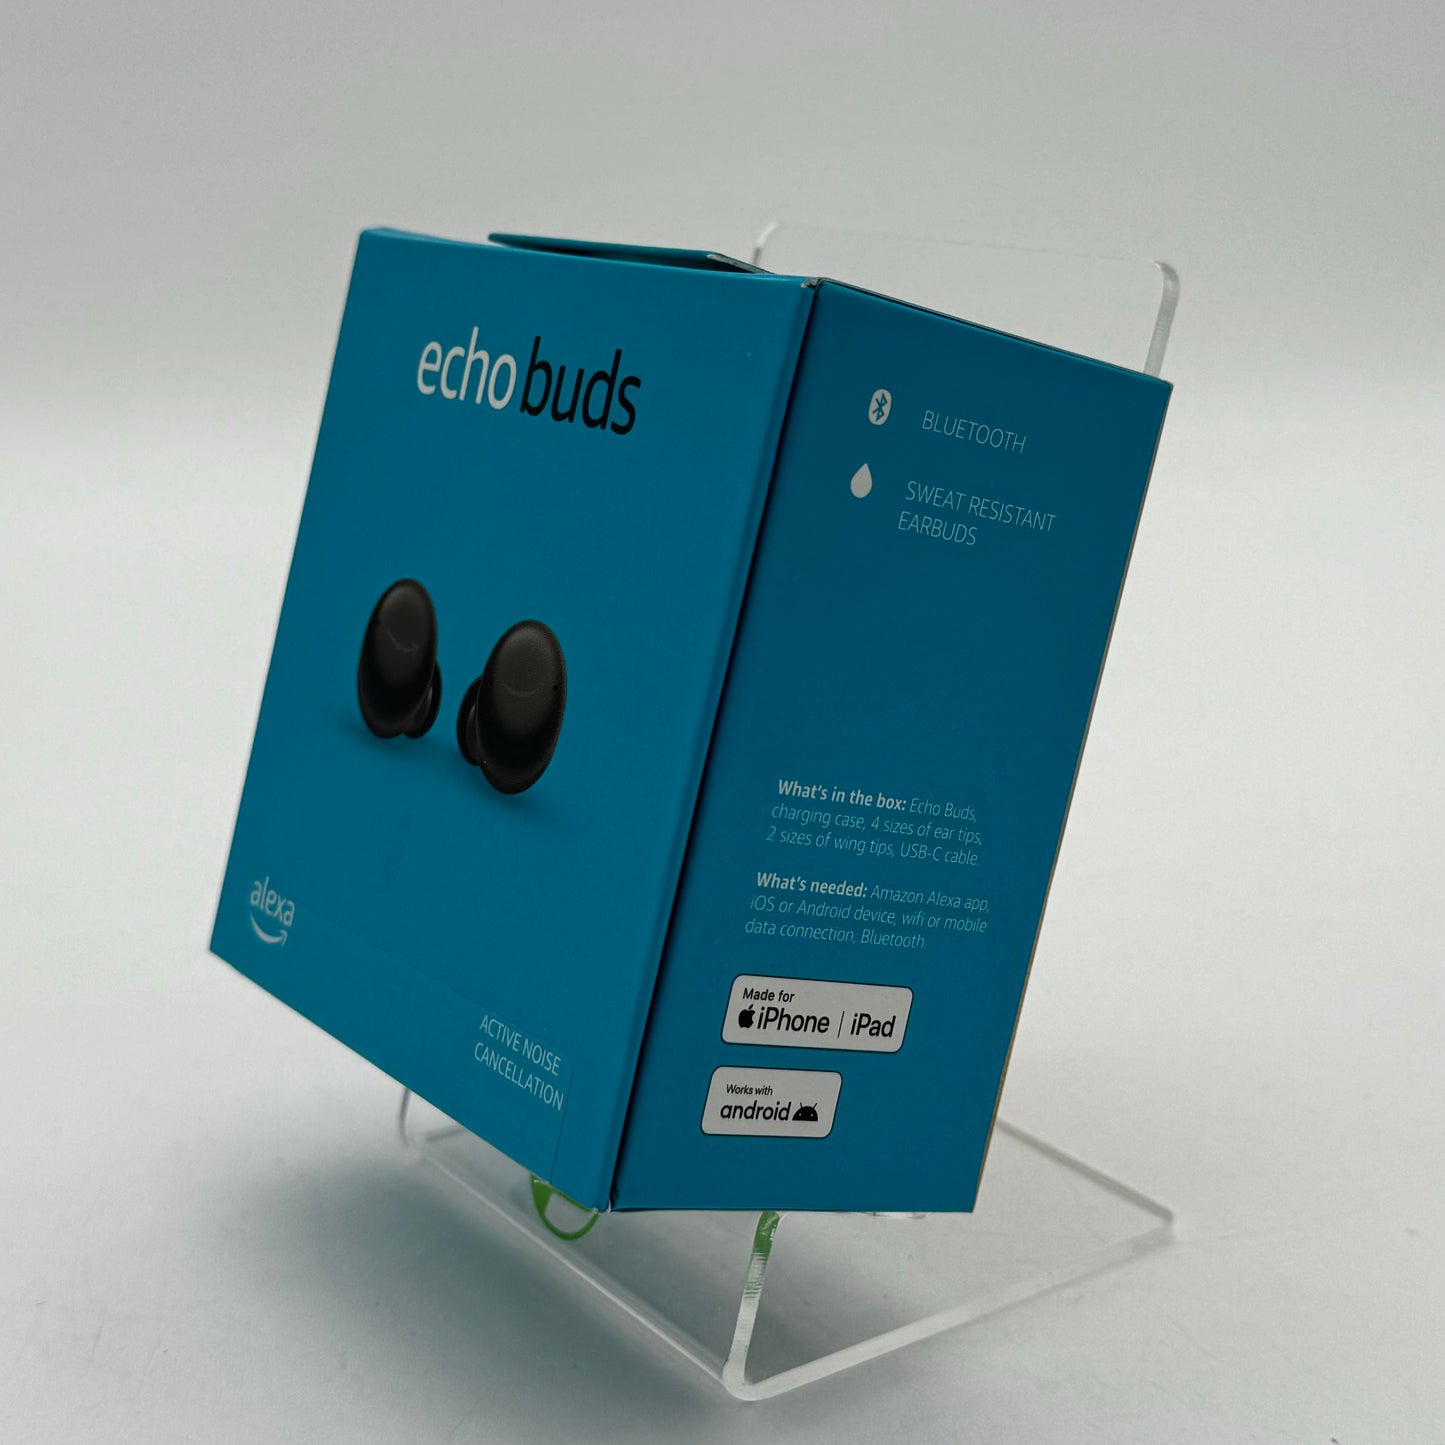 New Amazon Echo Buds Wireless Bluetooth Earbuds P6WE56